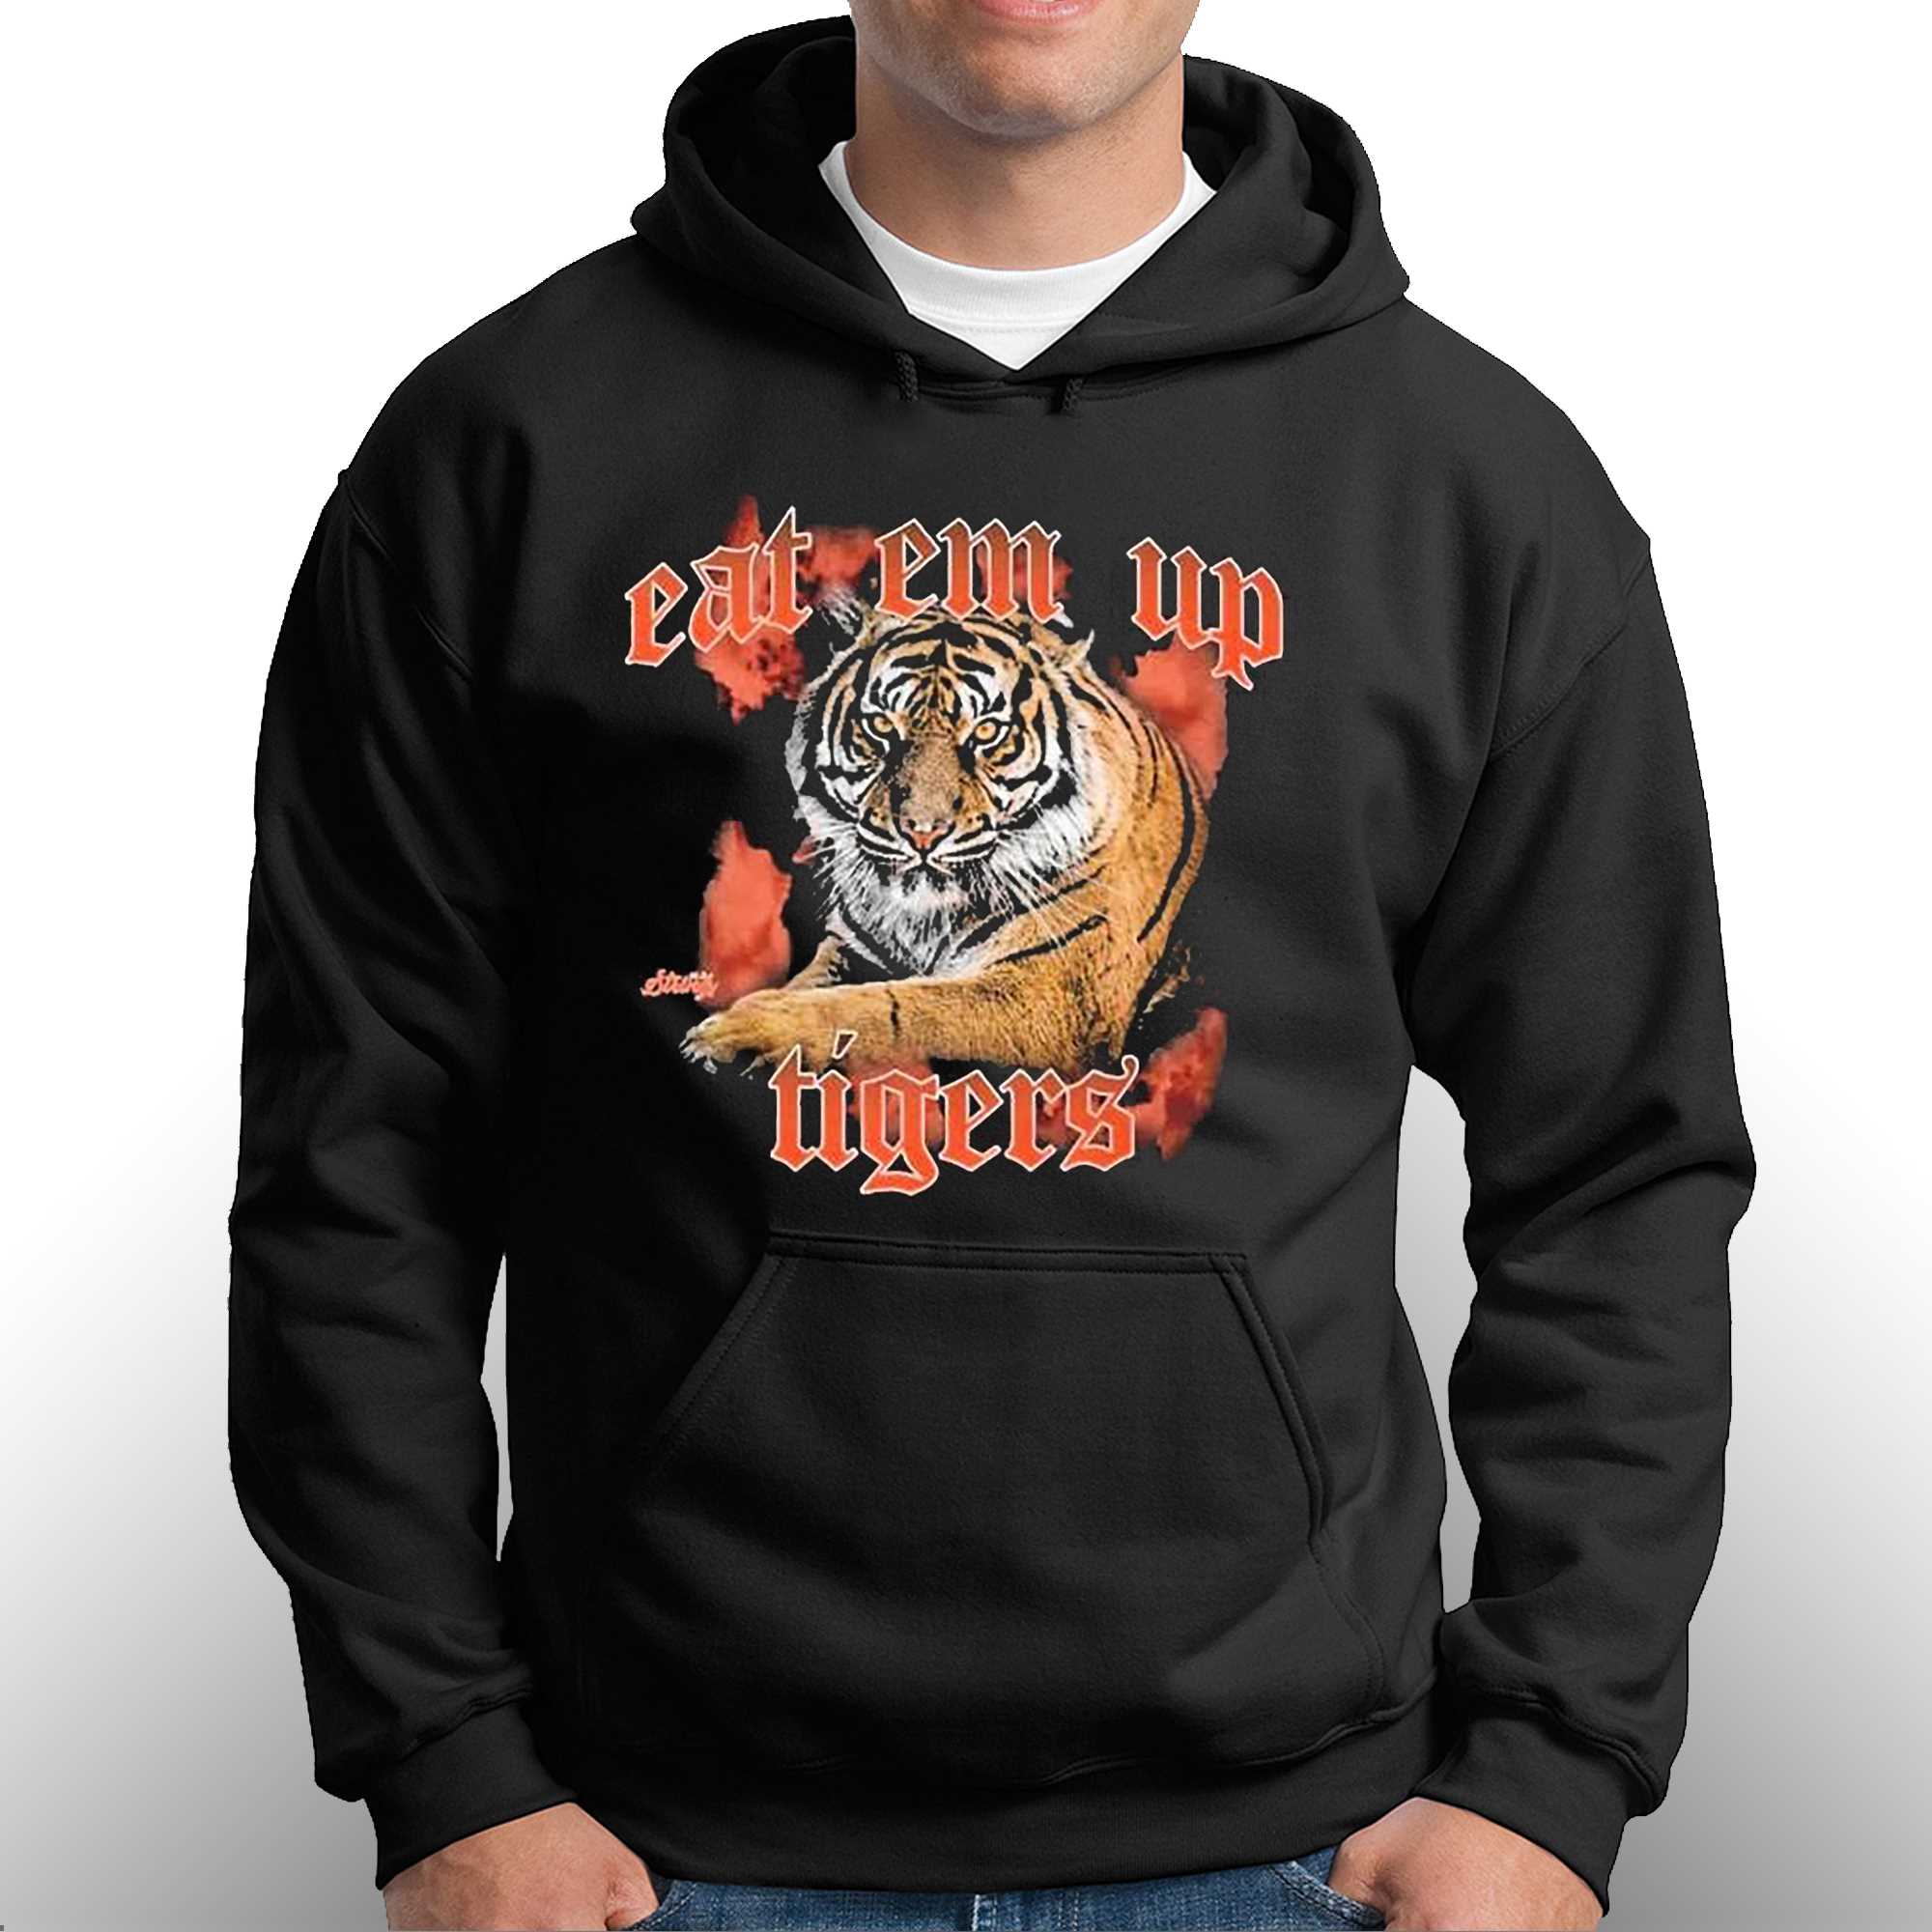 Detroit Tigers Eat Em Up Shirt